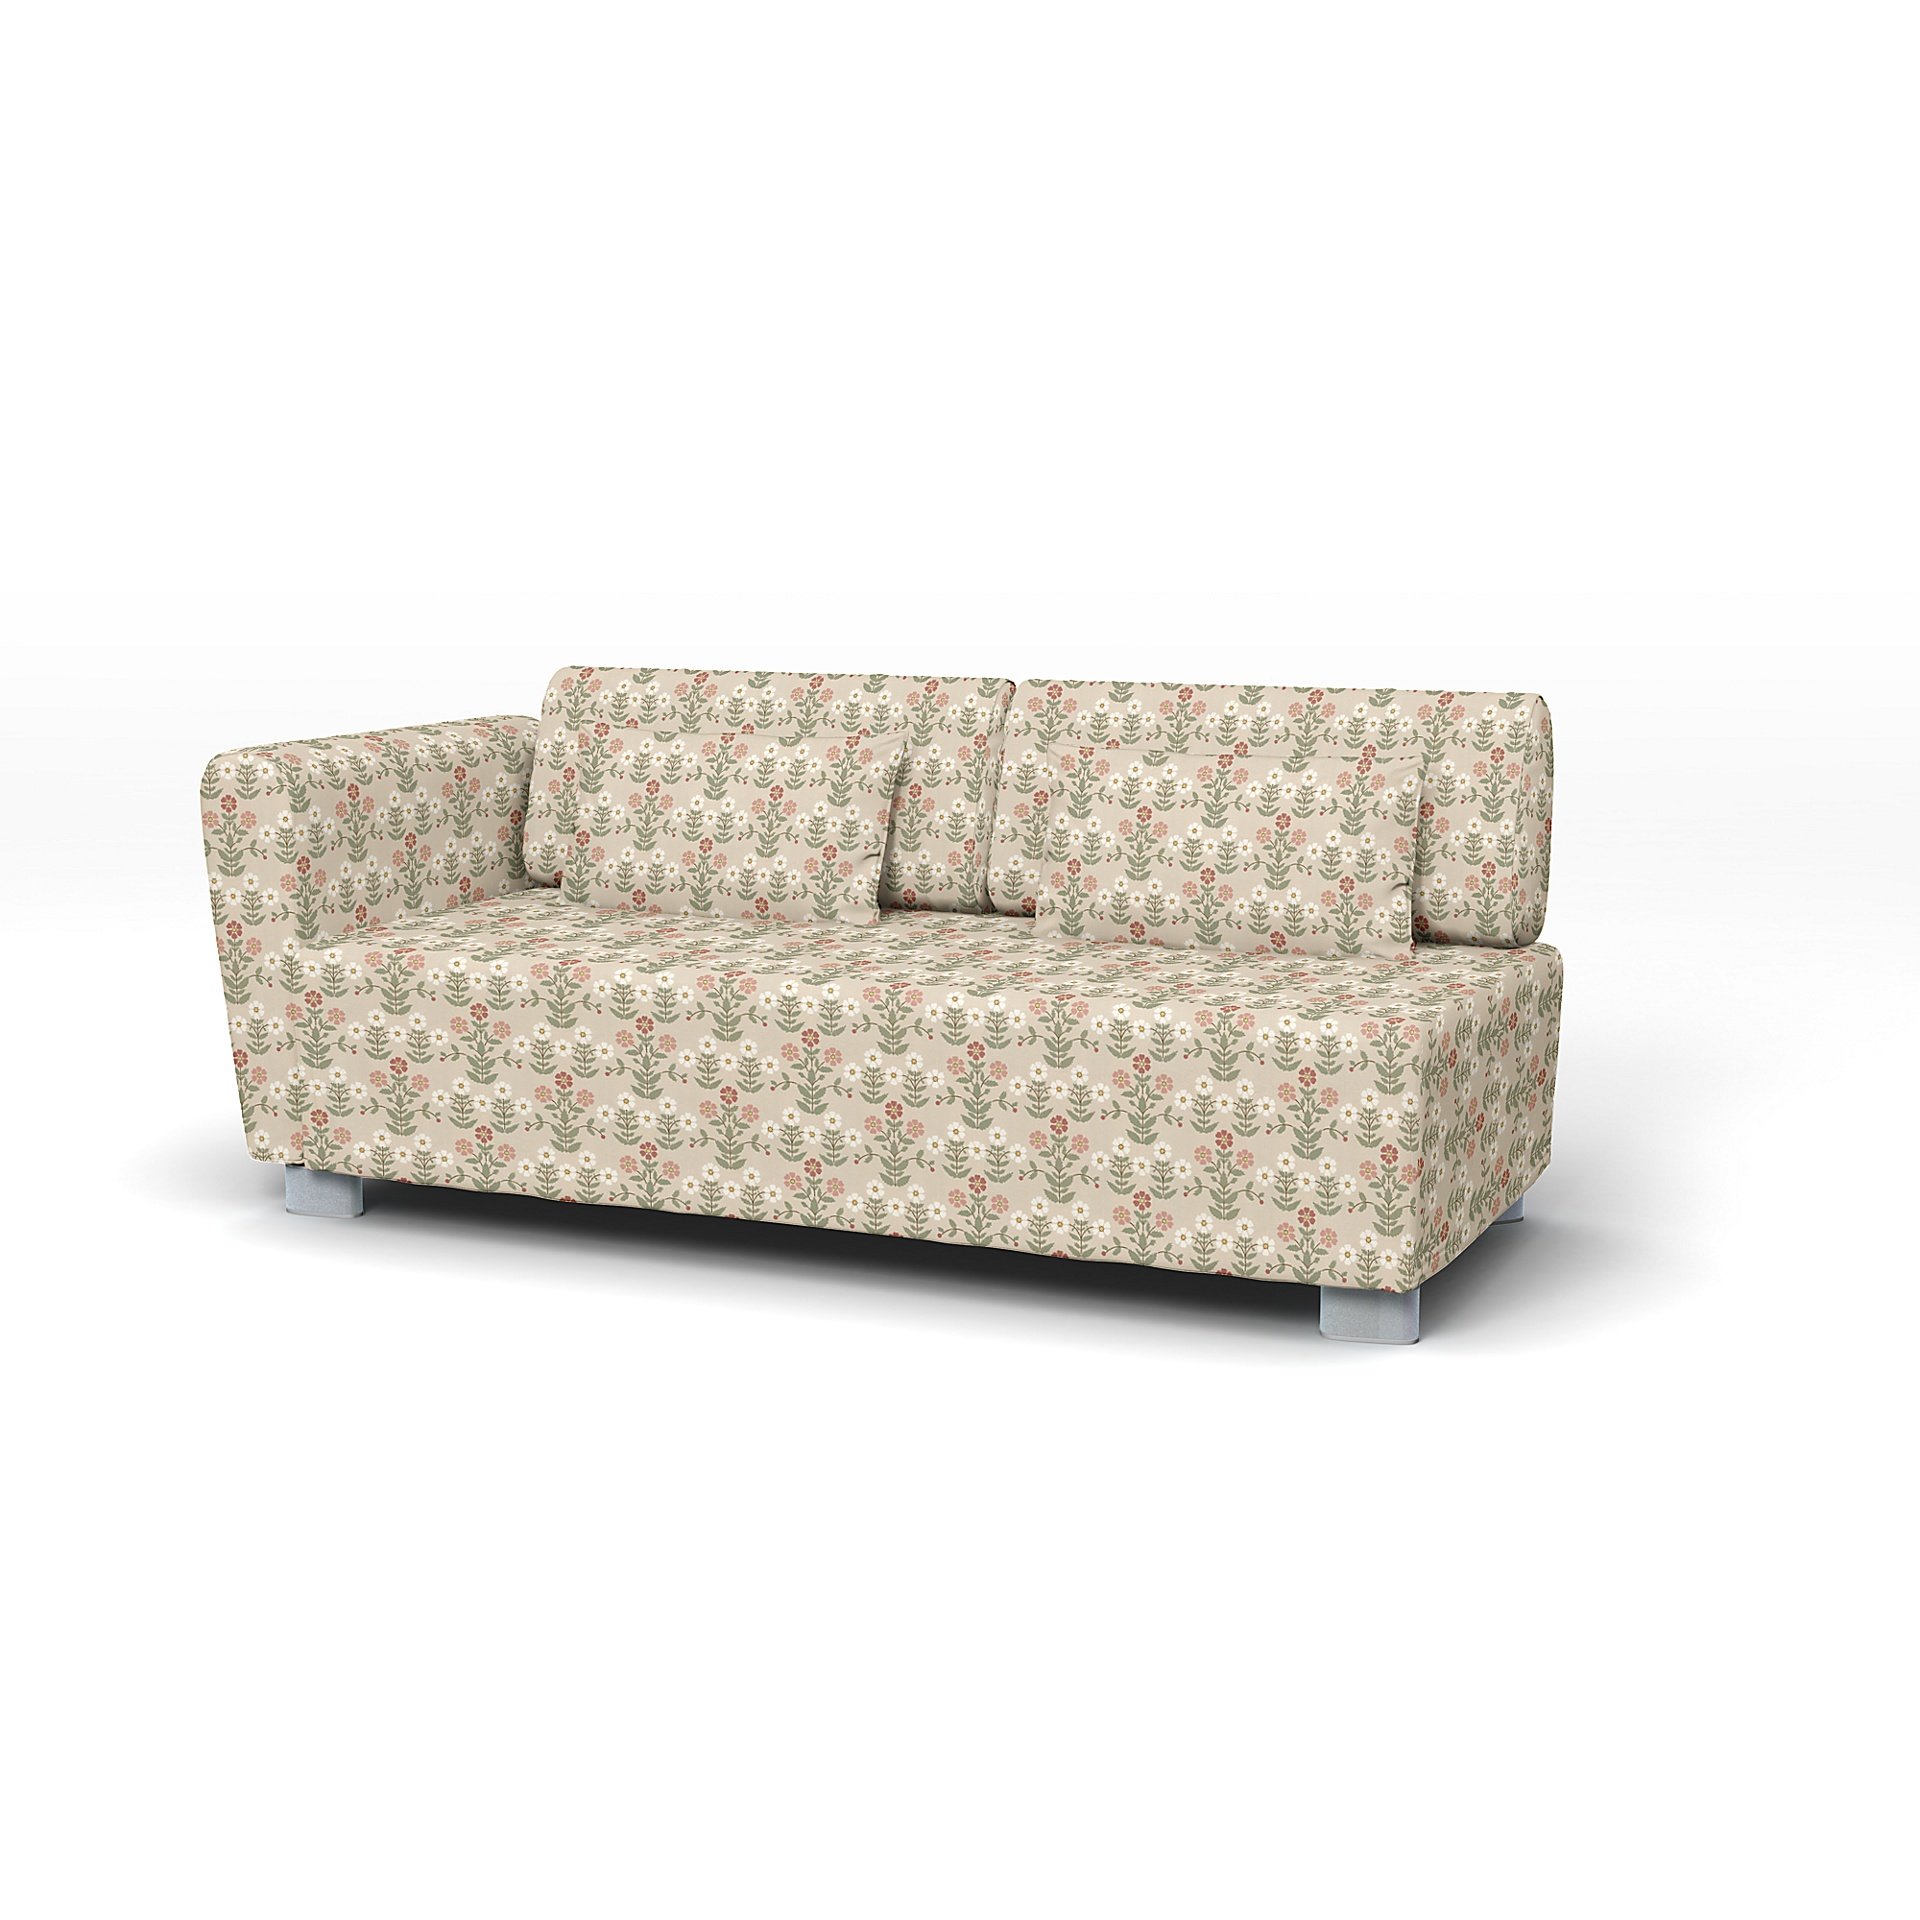 IKEA - Mysinge 2 Seater Sofa with Armrest Cover, Pink Sippor, BEMZ x BORASTAPETER COLLECTION - Bemz